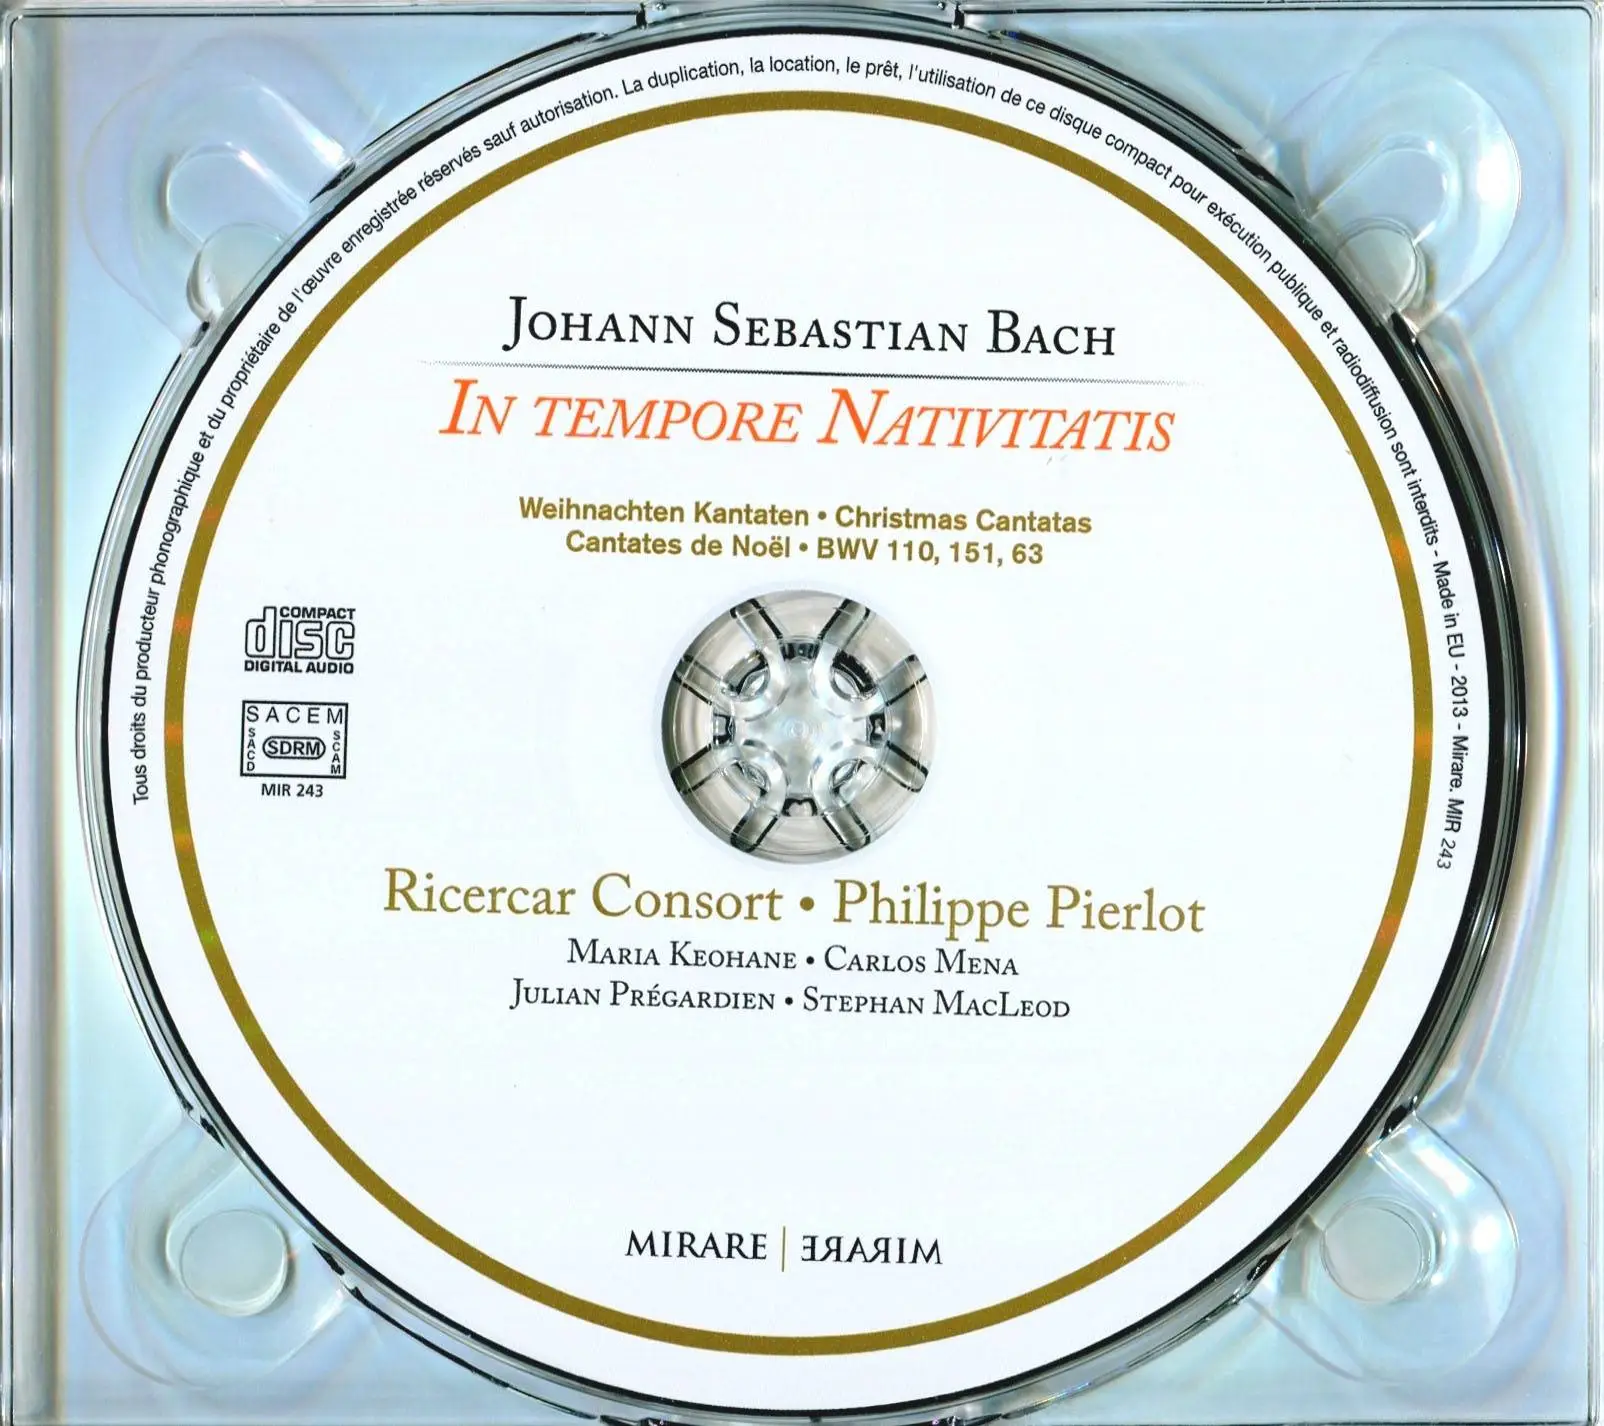 Ricercar Consort, Philippe Pierlot - J.S. Bach - In Tempore Nativitatis ...